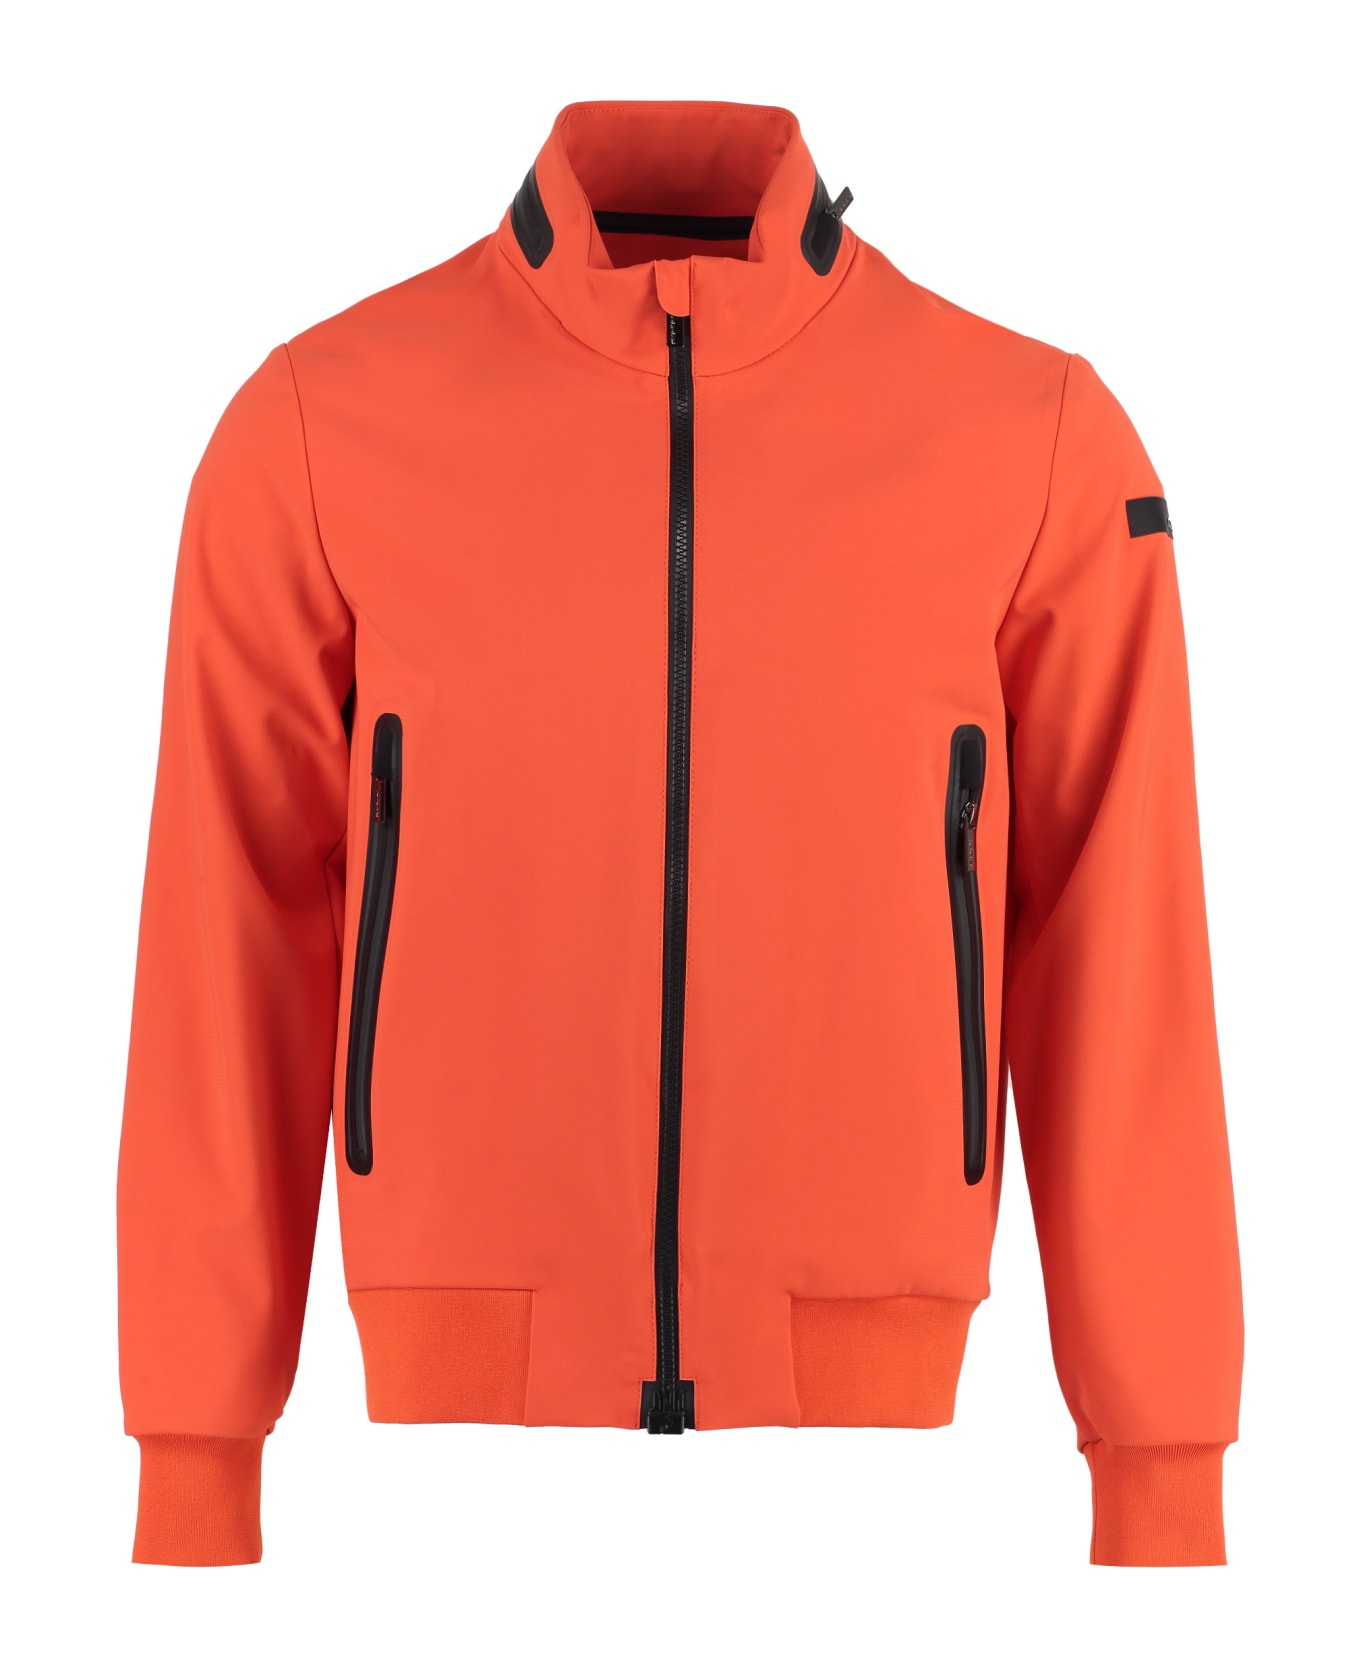 RRD - Roberto Ricci Design Techno Fabric Jacket - Orange